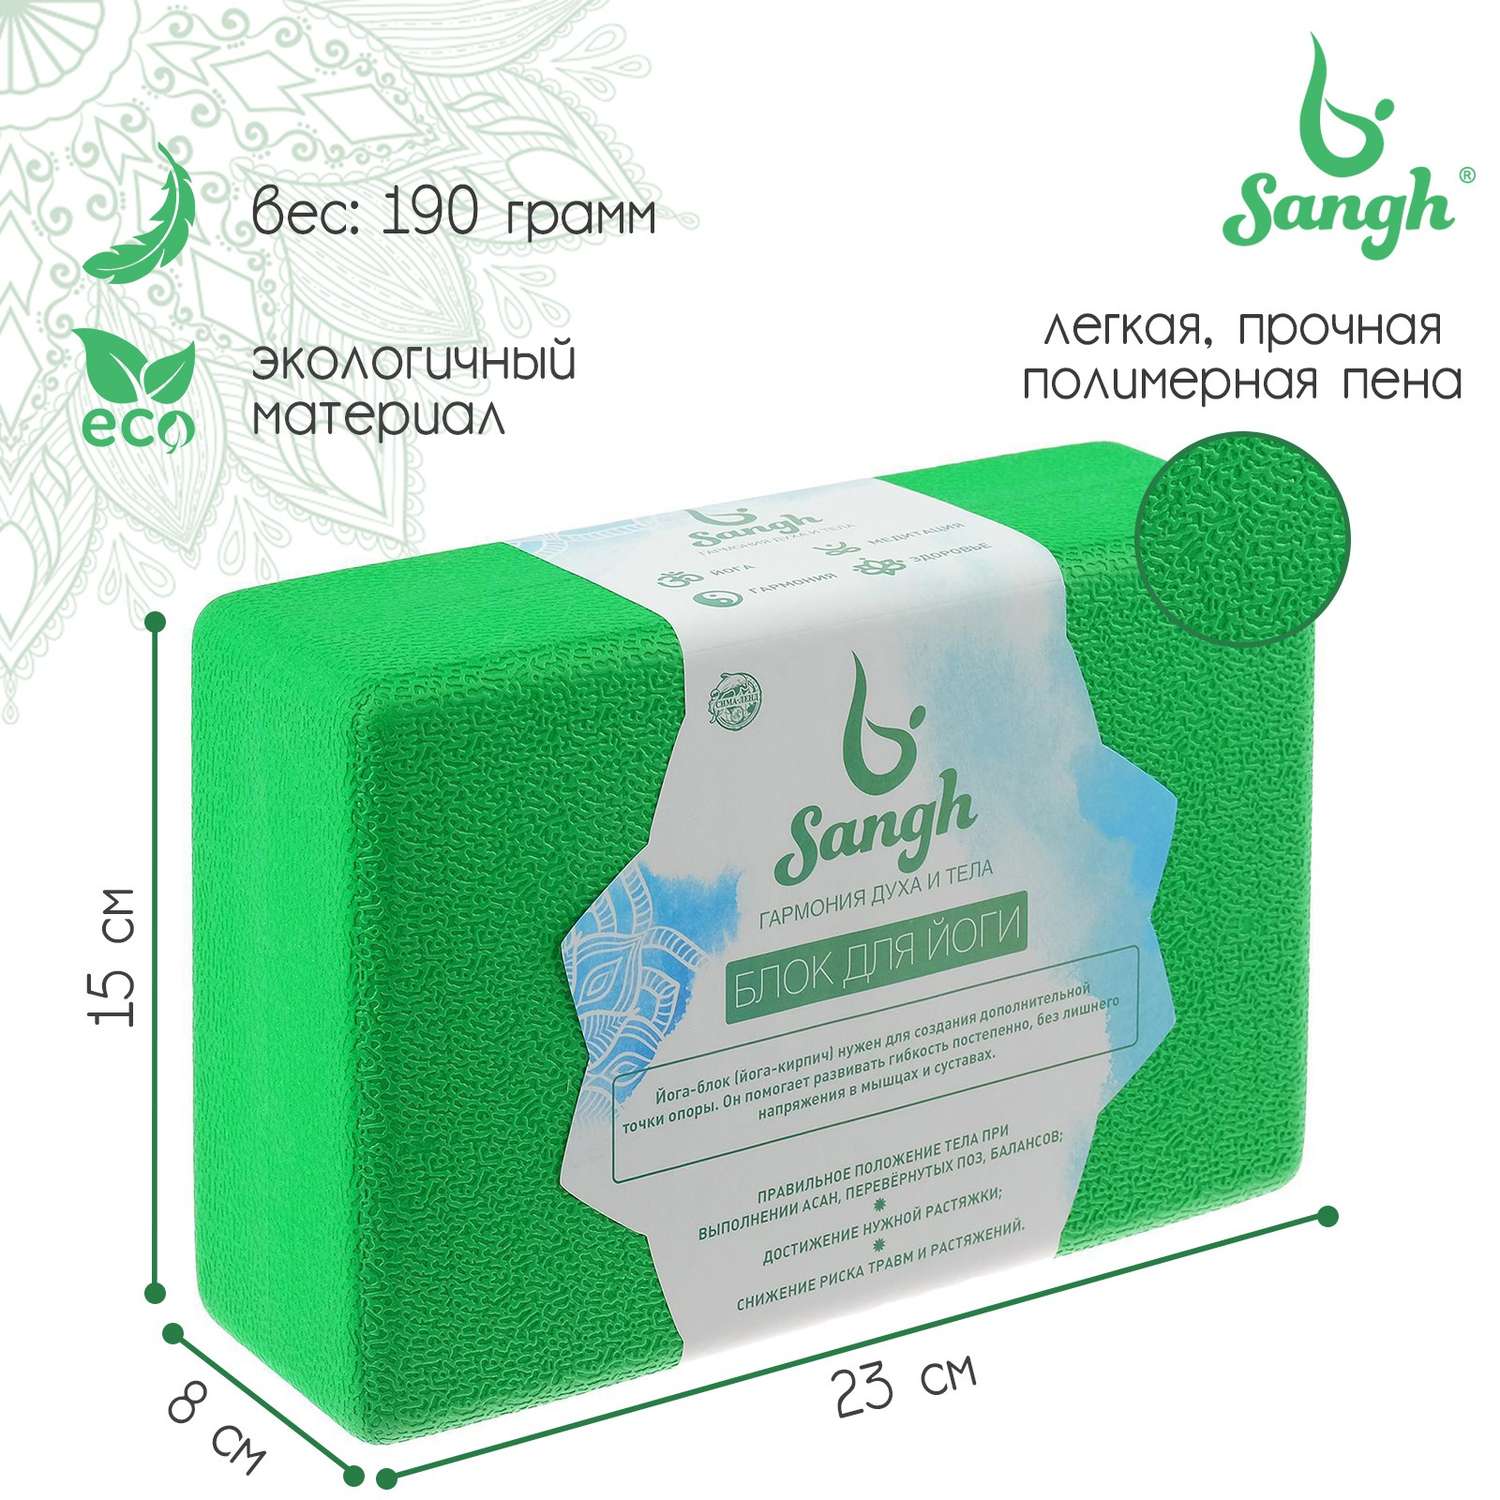 Блок для йоги Sangh 23 х 15 х 8 см. 190 г. ребристый. цвет зелёный - фото 1